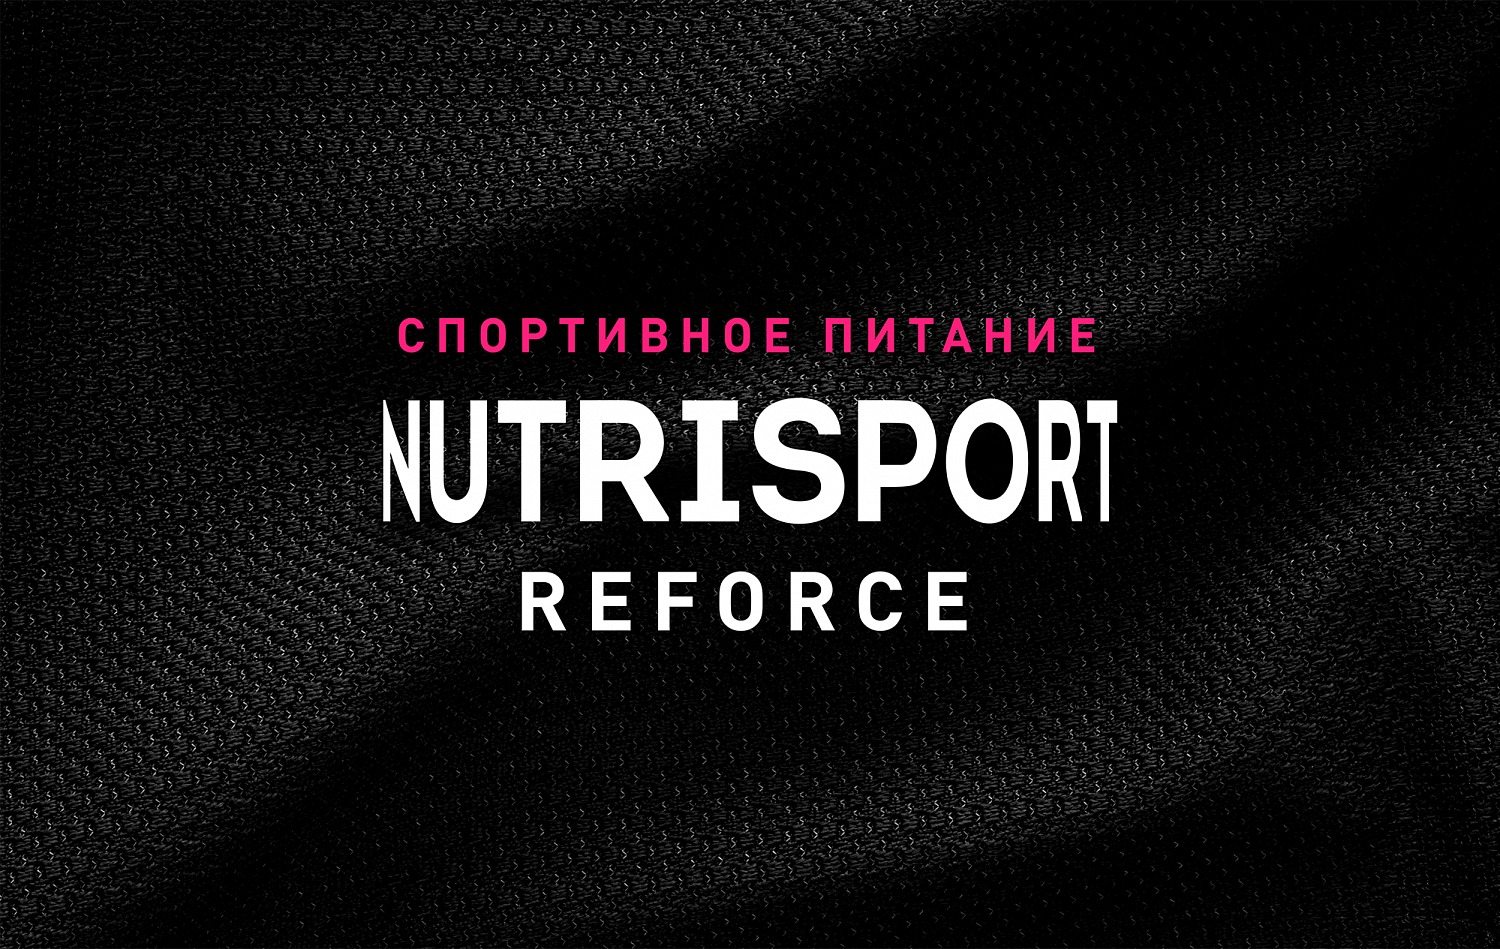 NutriSport Reforce - Портфолио Depot